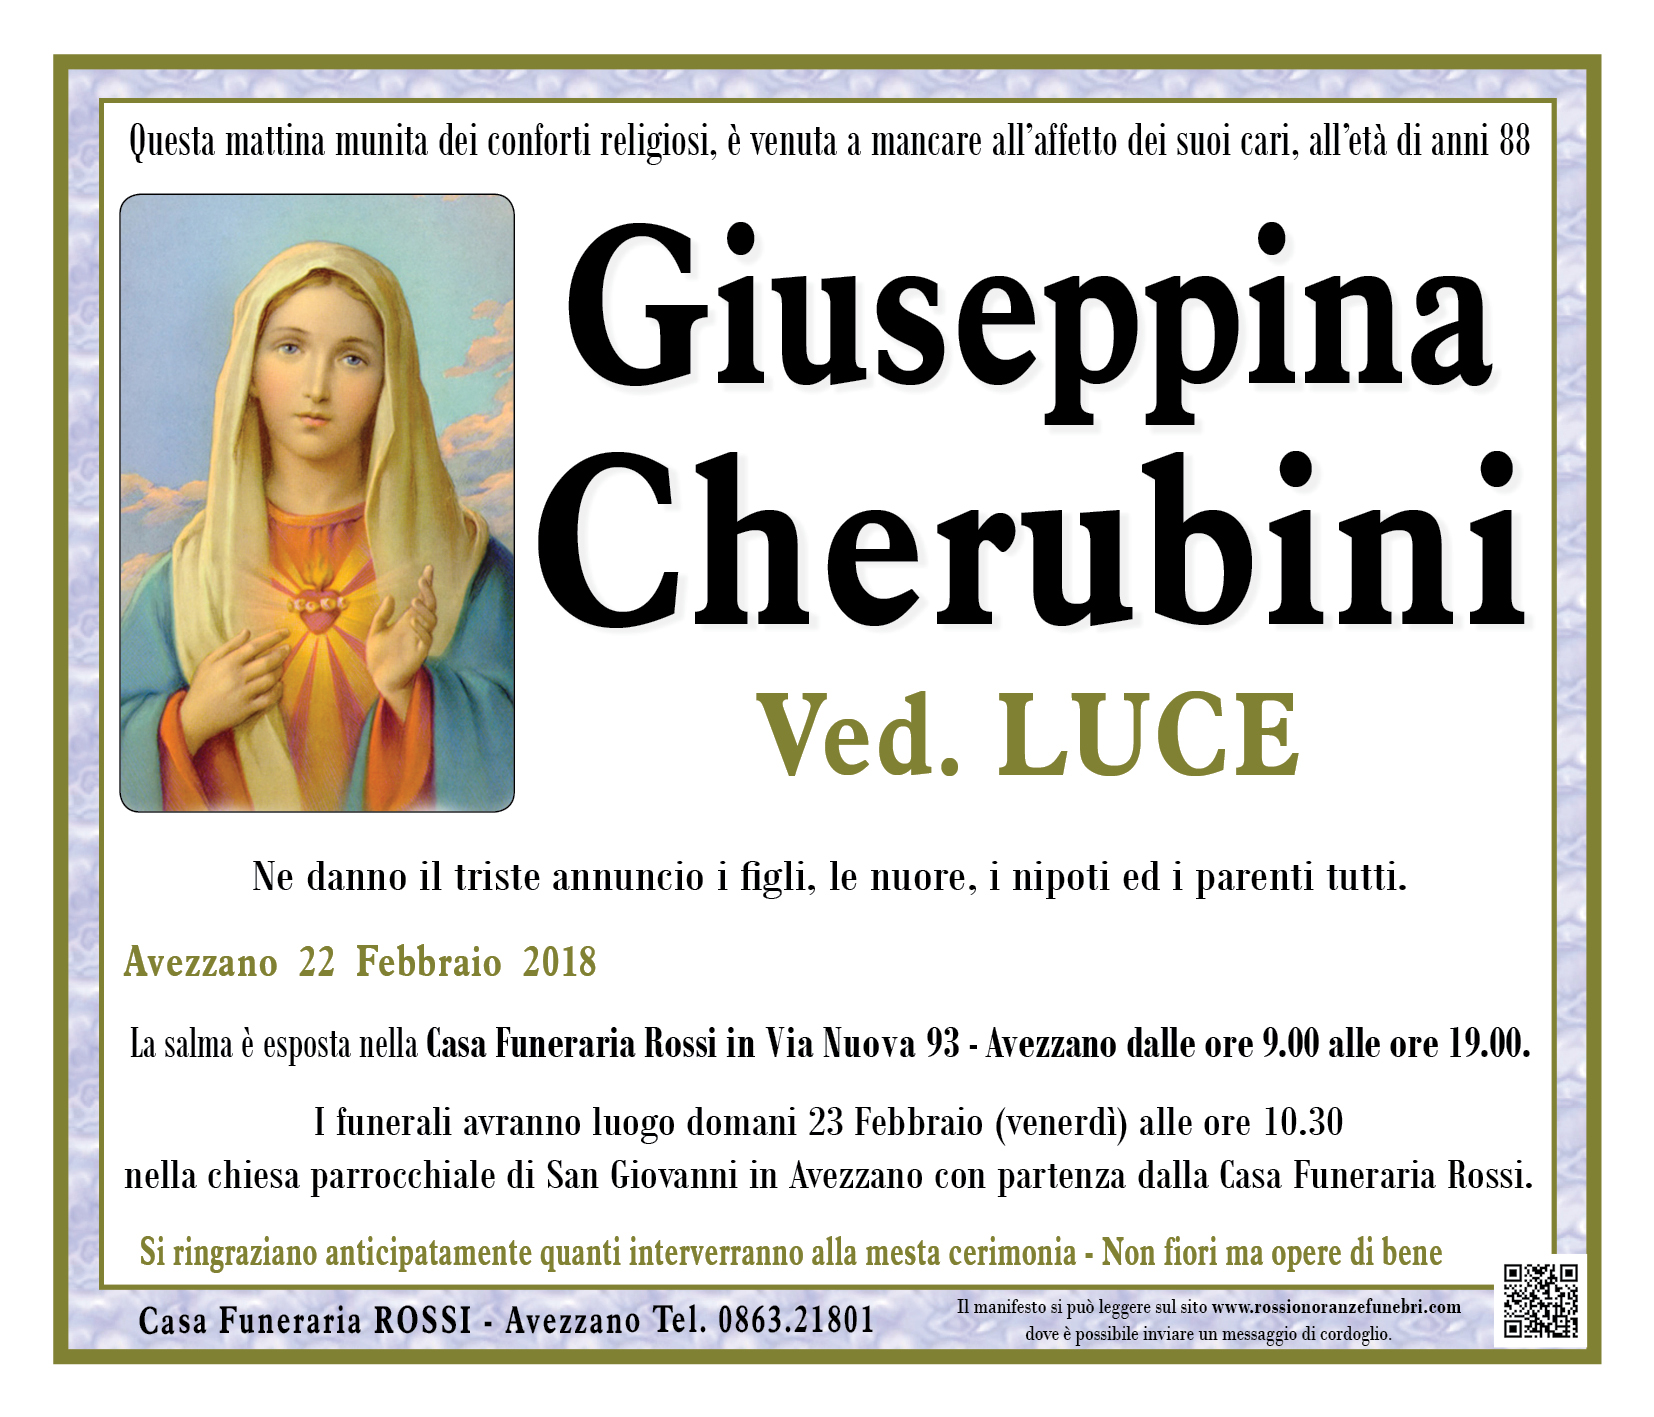 Giuseppina Cherubini